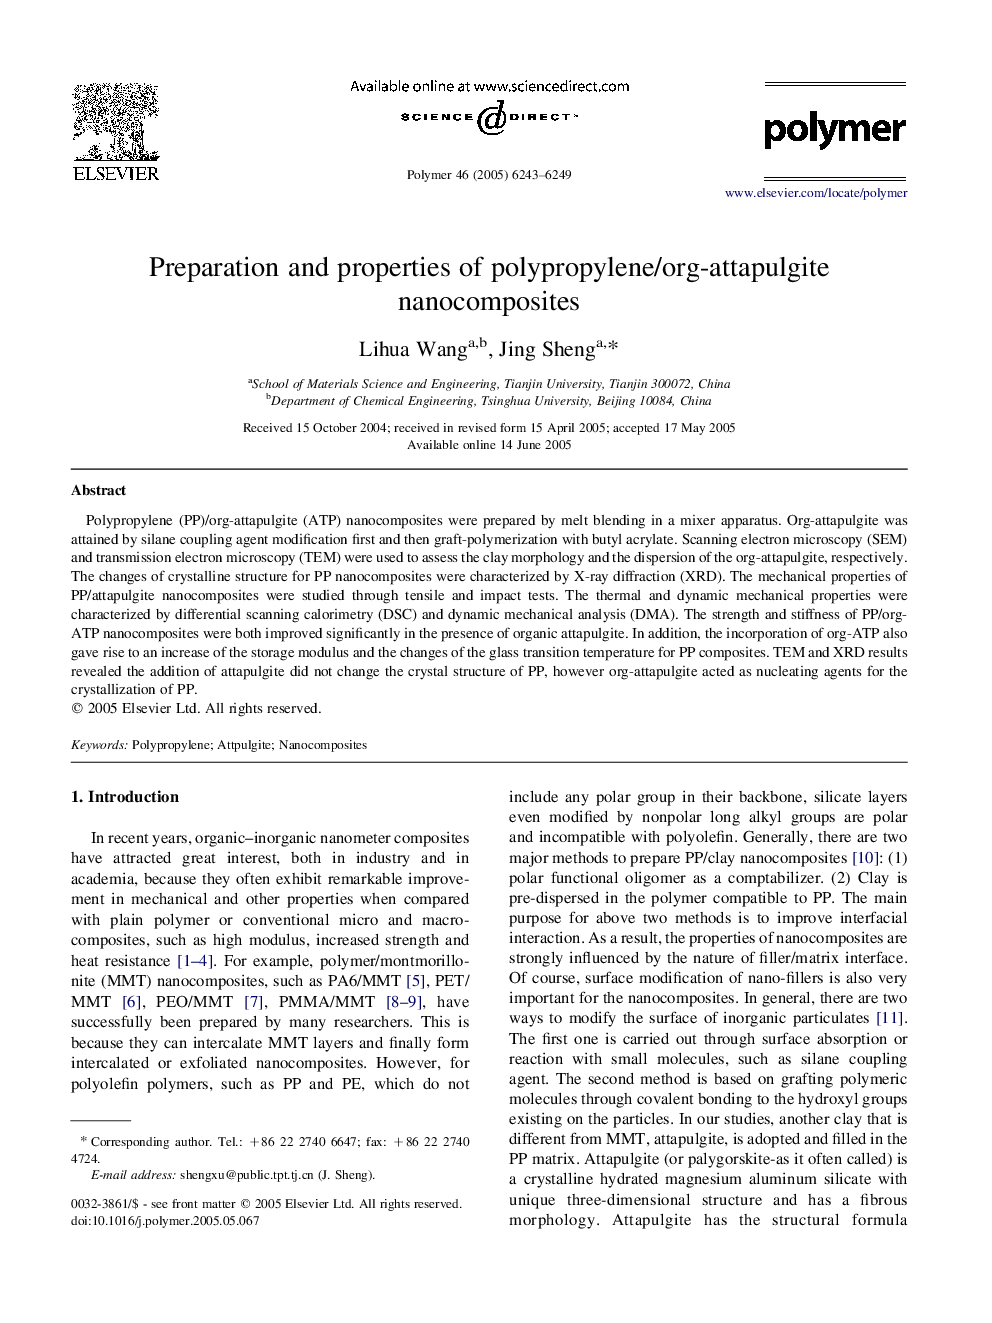 Preparation and properties of polypropylene/org-attapulgite nanocomposites